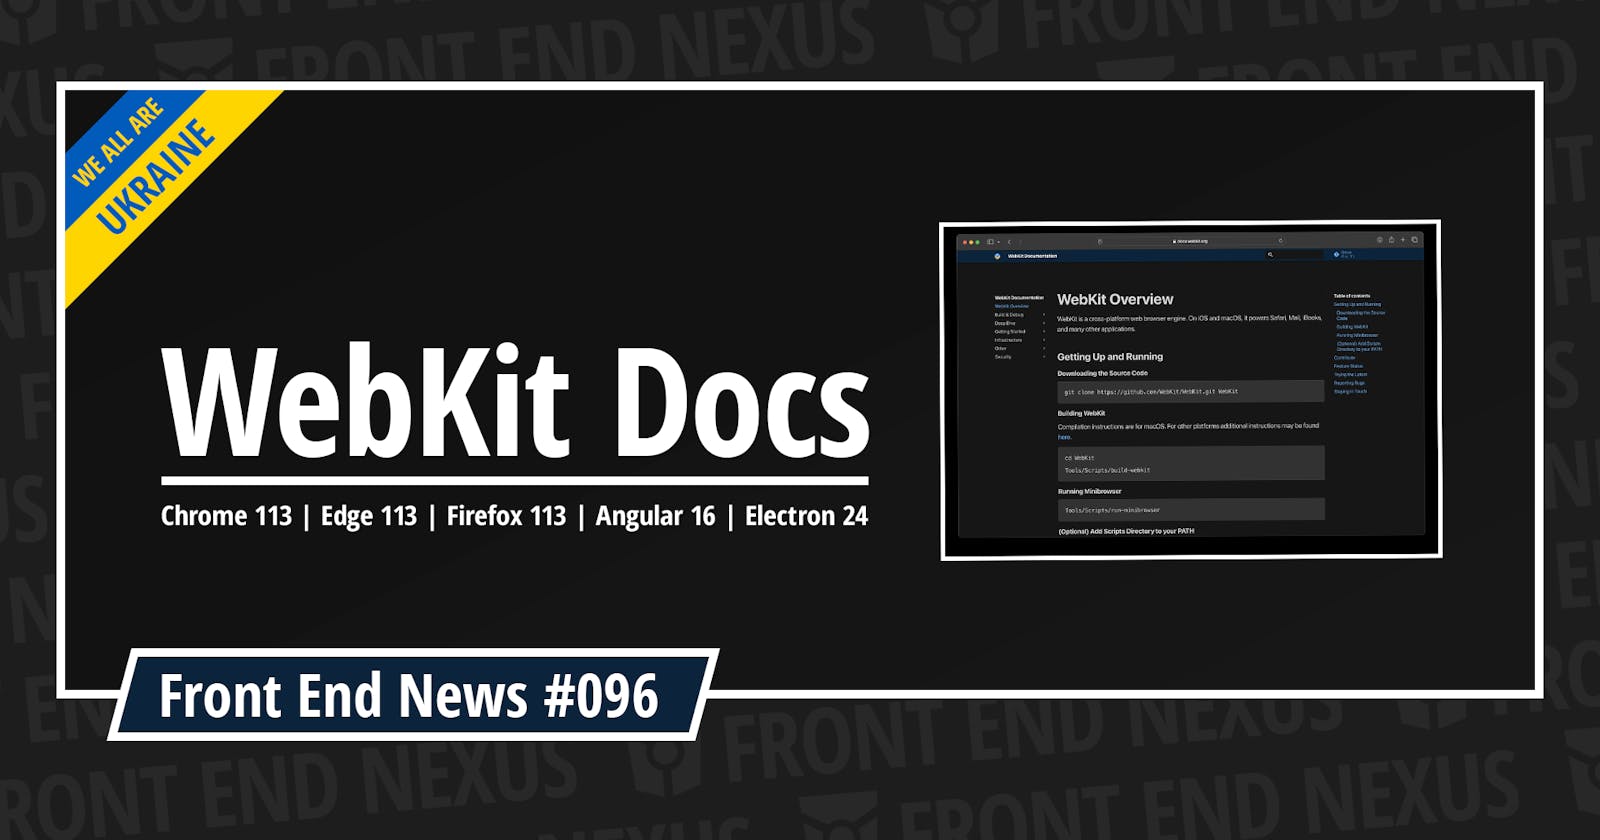 WebKit Documentation, Chrome 113, Edge 113, Firefox 113, Angular 16, Electron 24, and more | Front End News #096